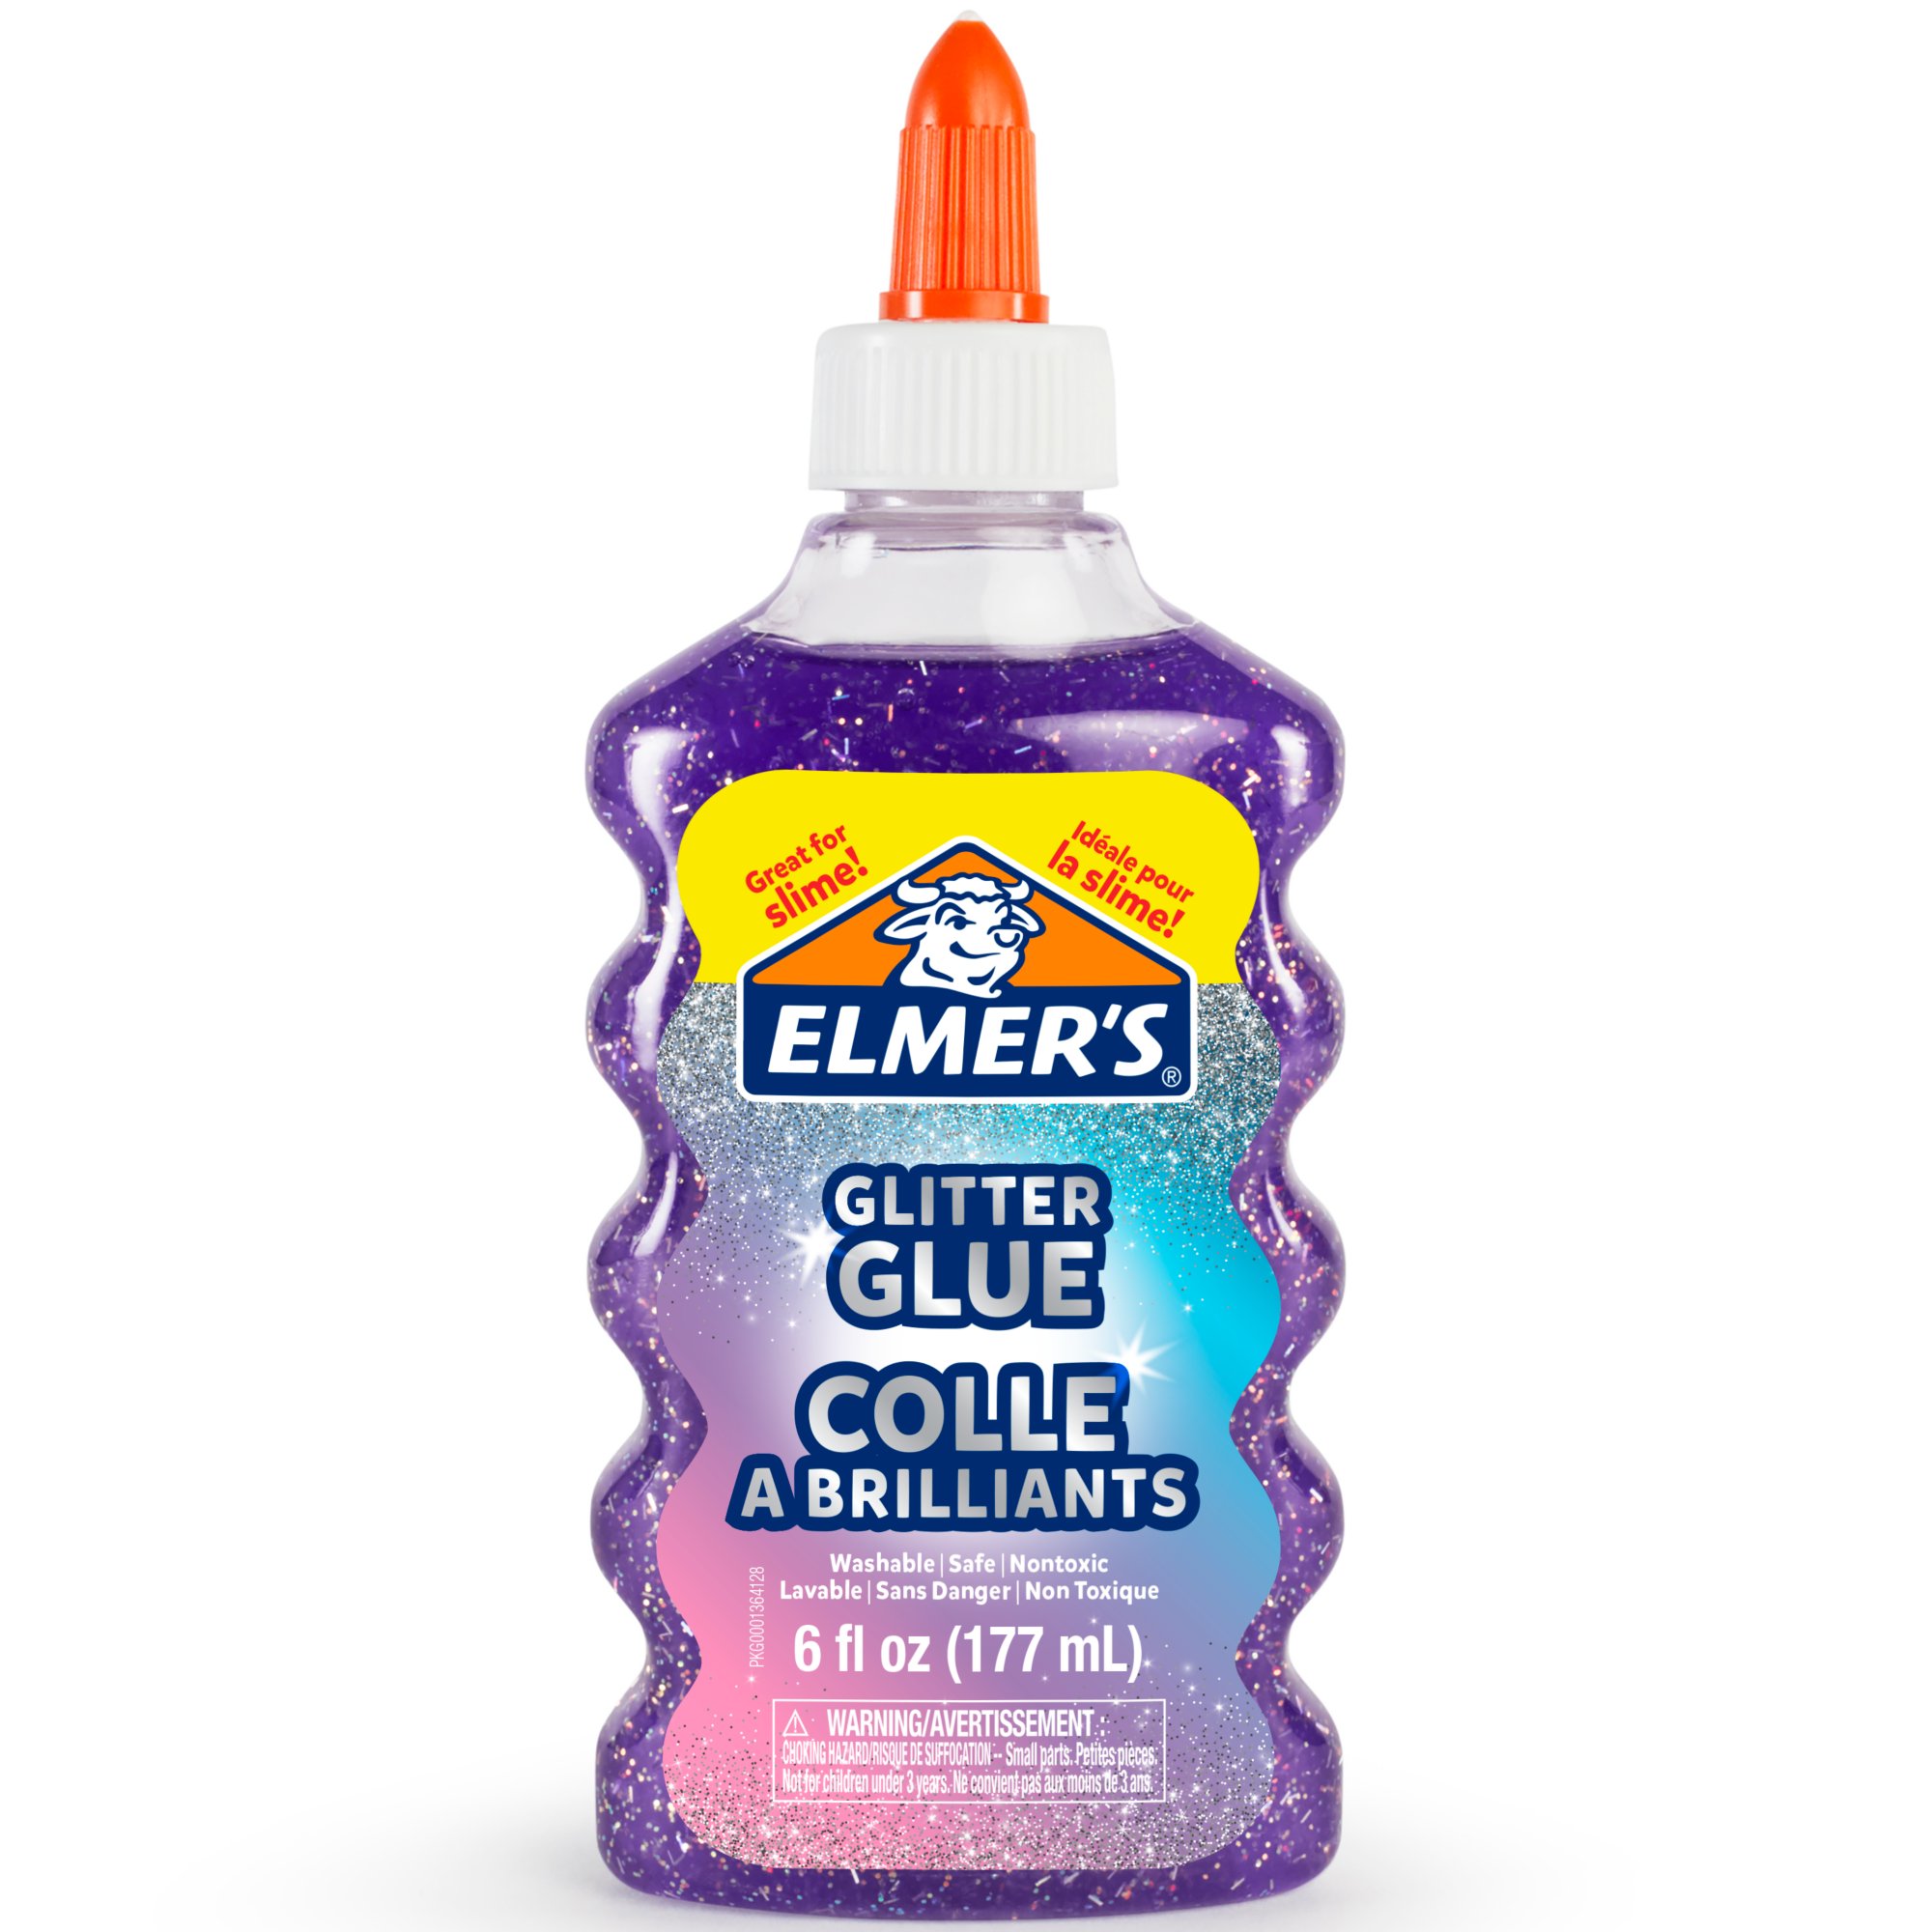  BEST PRICE: Elmer's Glitter Glue